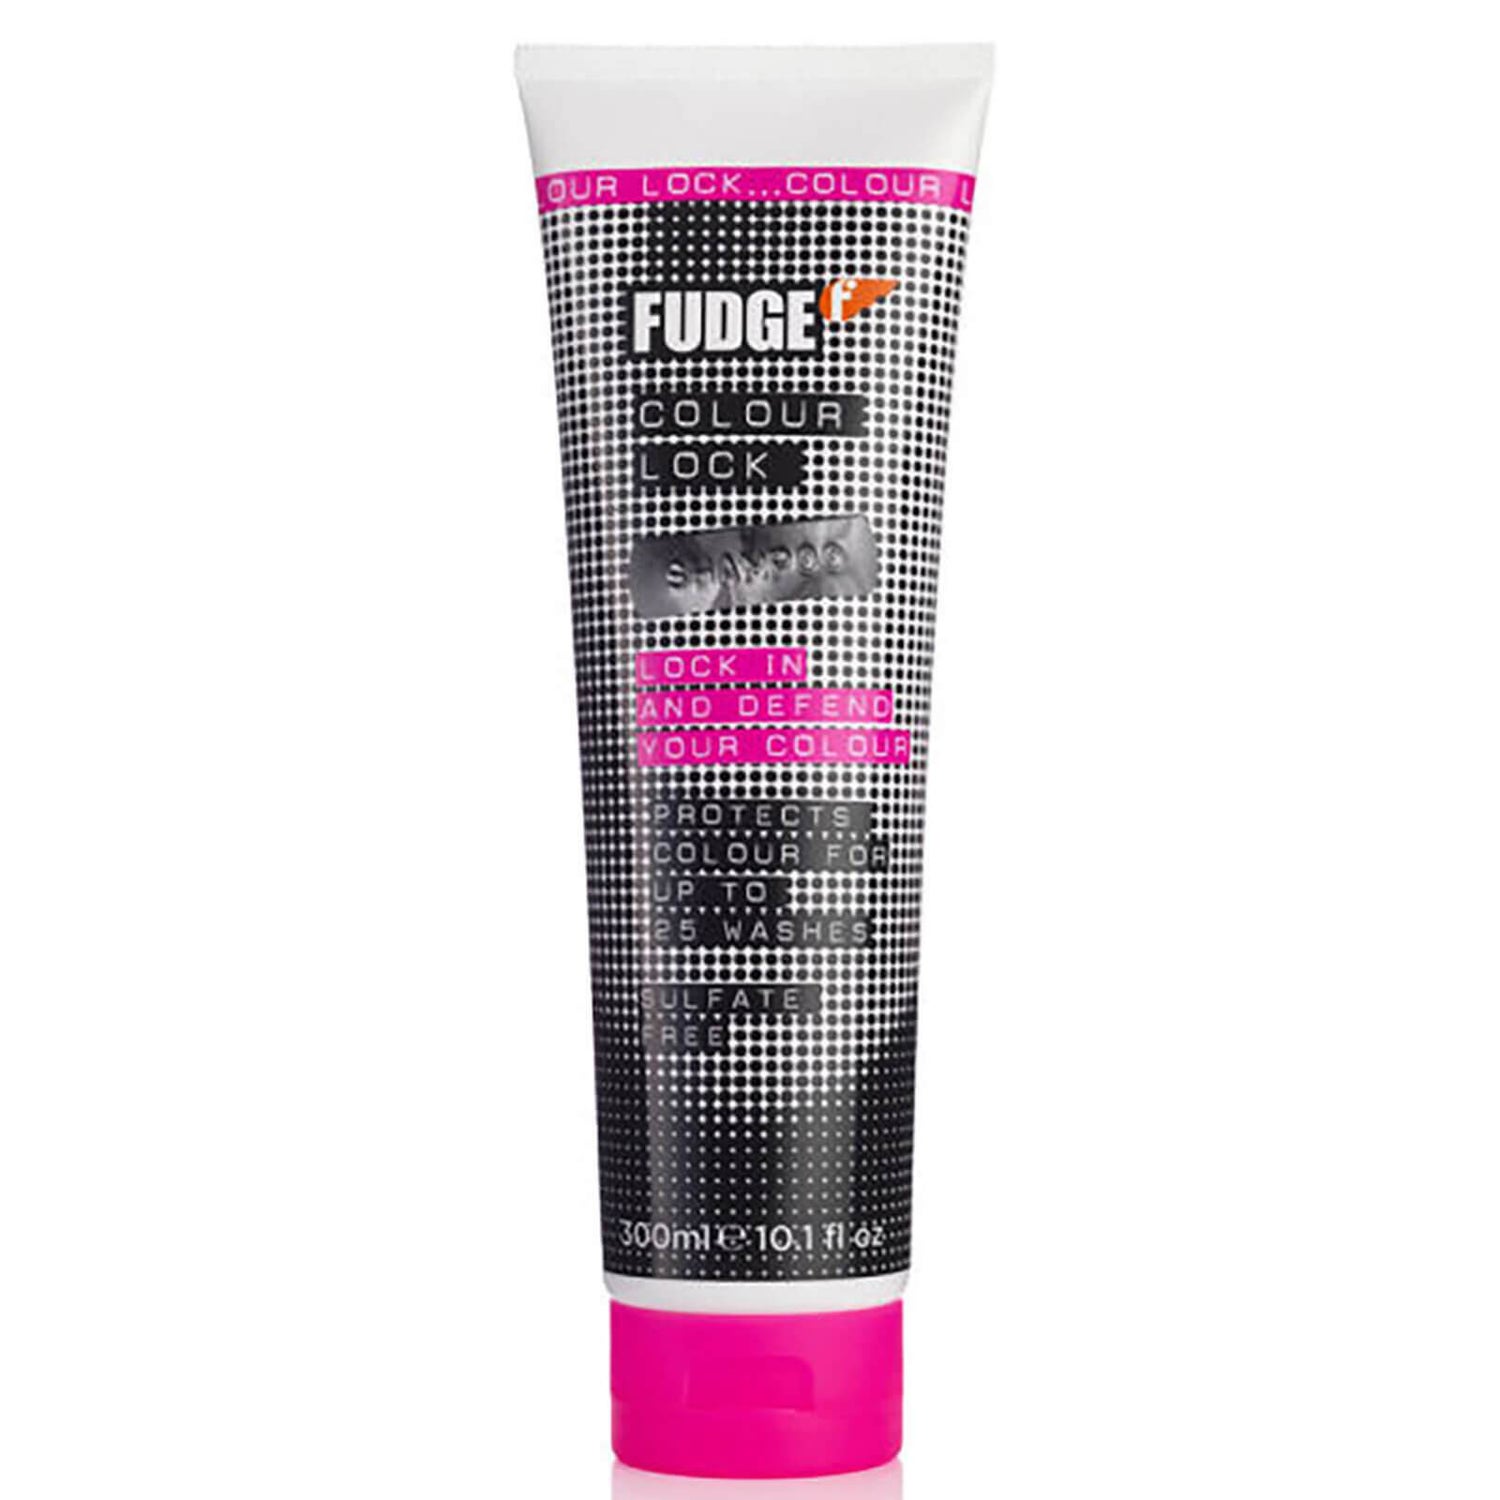 Fudge Colour Lock Shampoo (300ml)